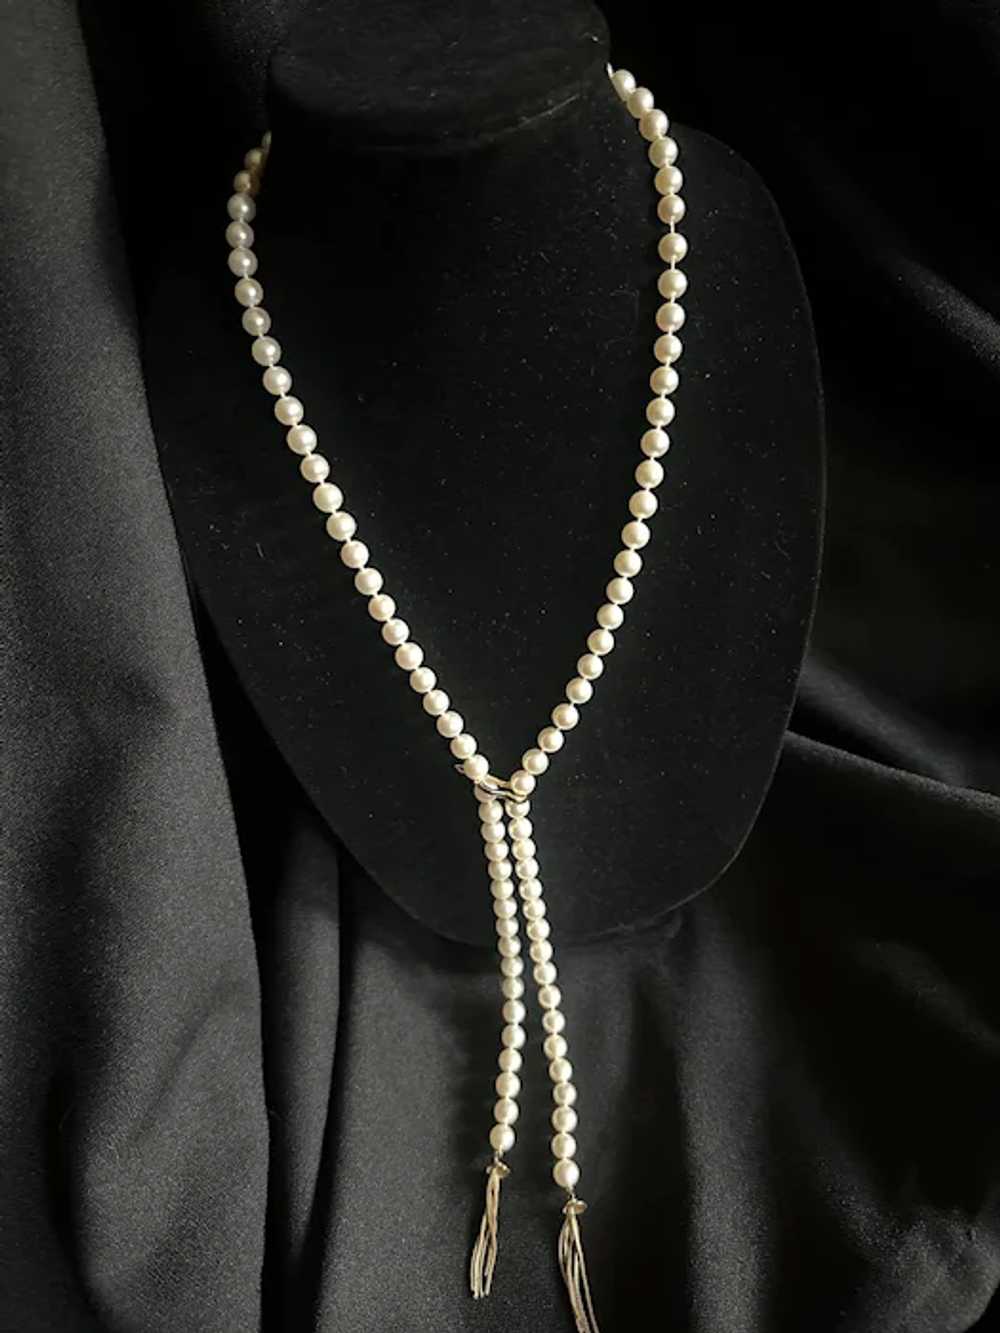 Vintage Pearl Lariat Necklace w/Gold Tassels 7-8mm - image 4